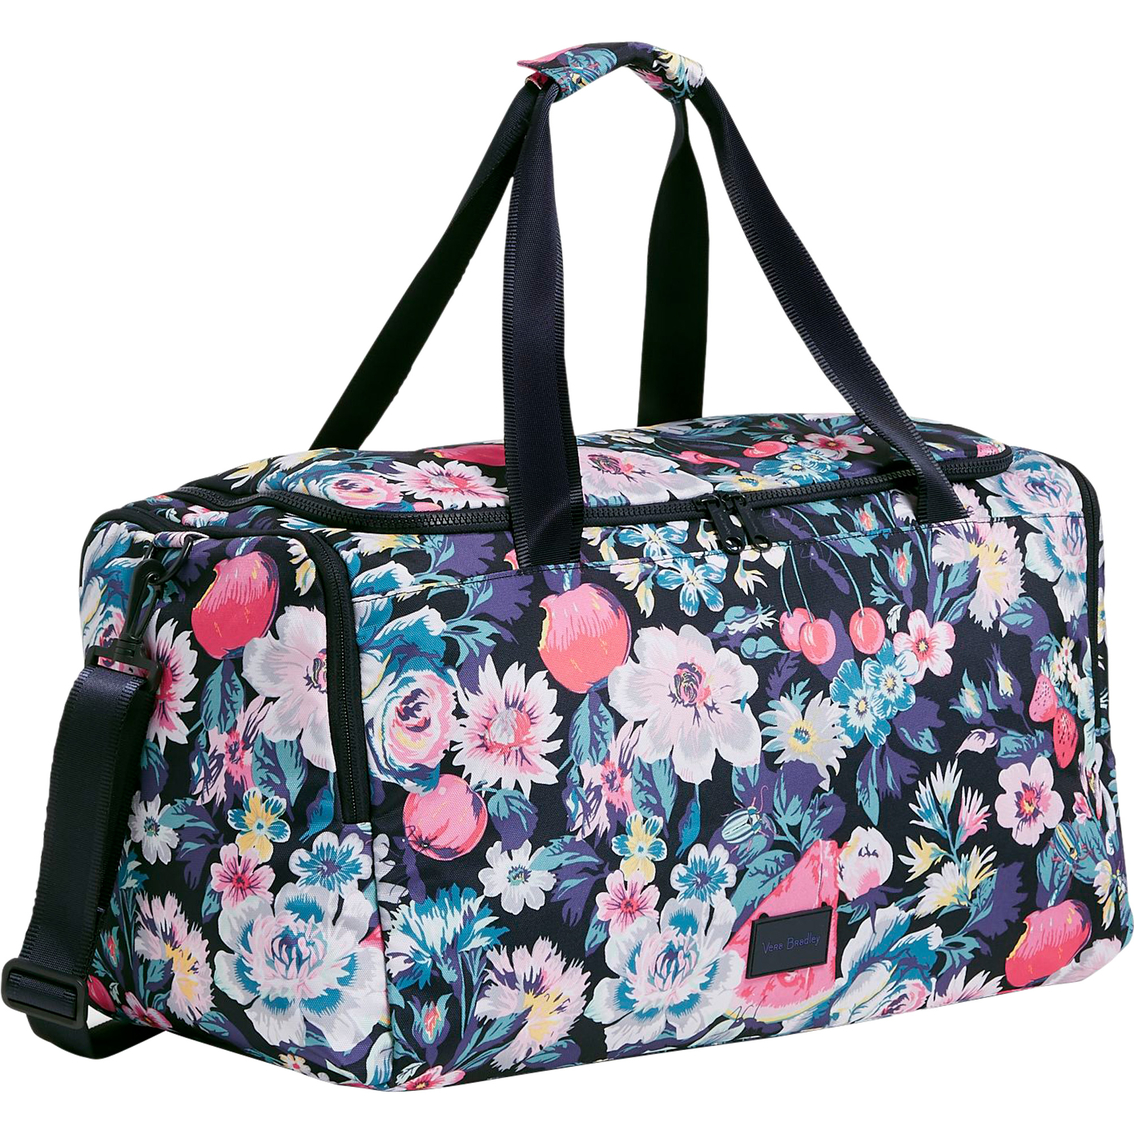 Vera Bradley Travel Duffel, Garden Picnic | Luggage | Clothing ...